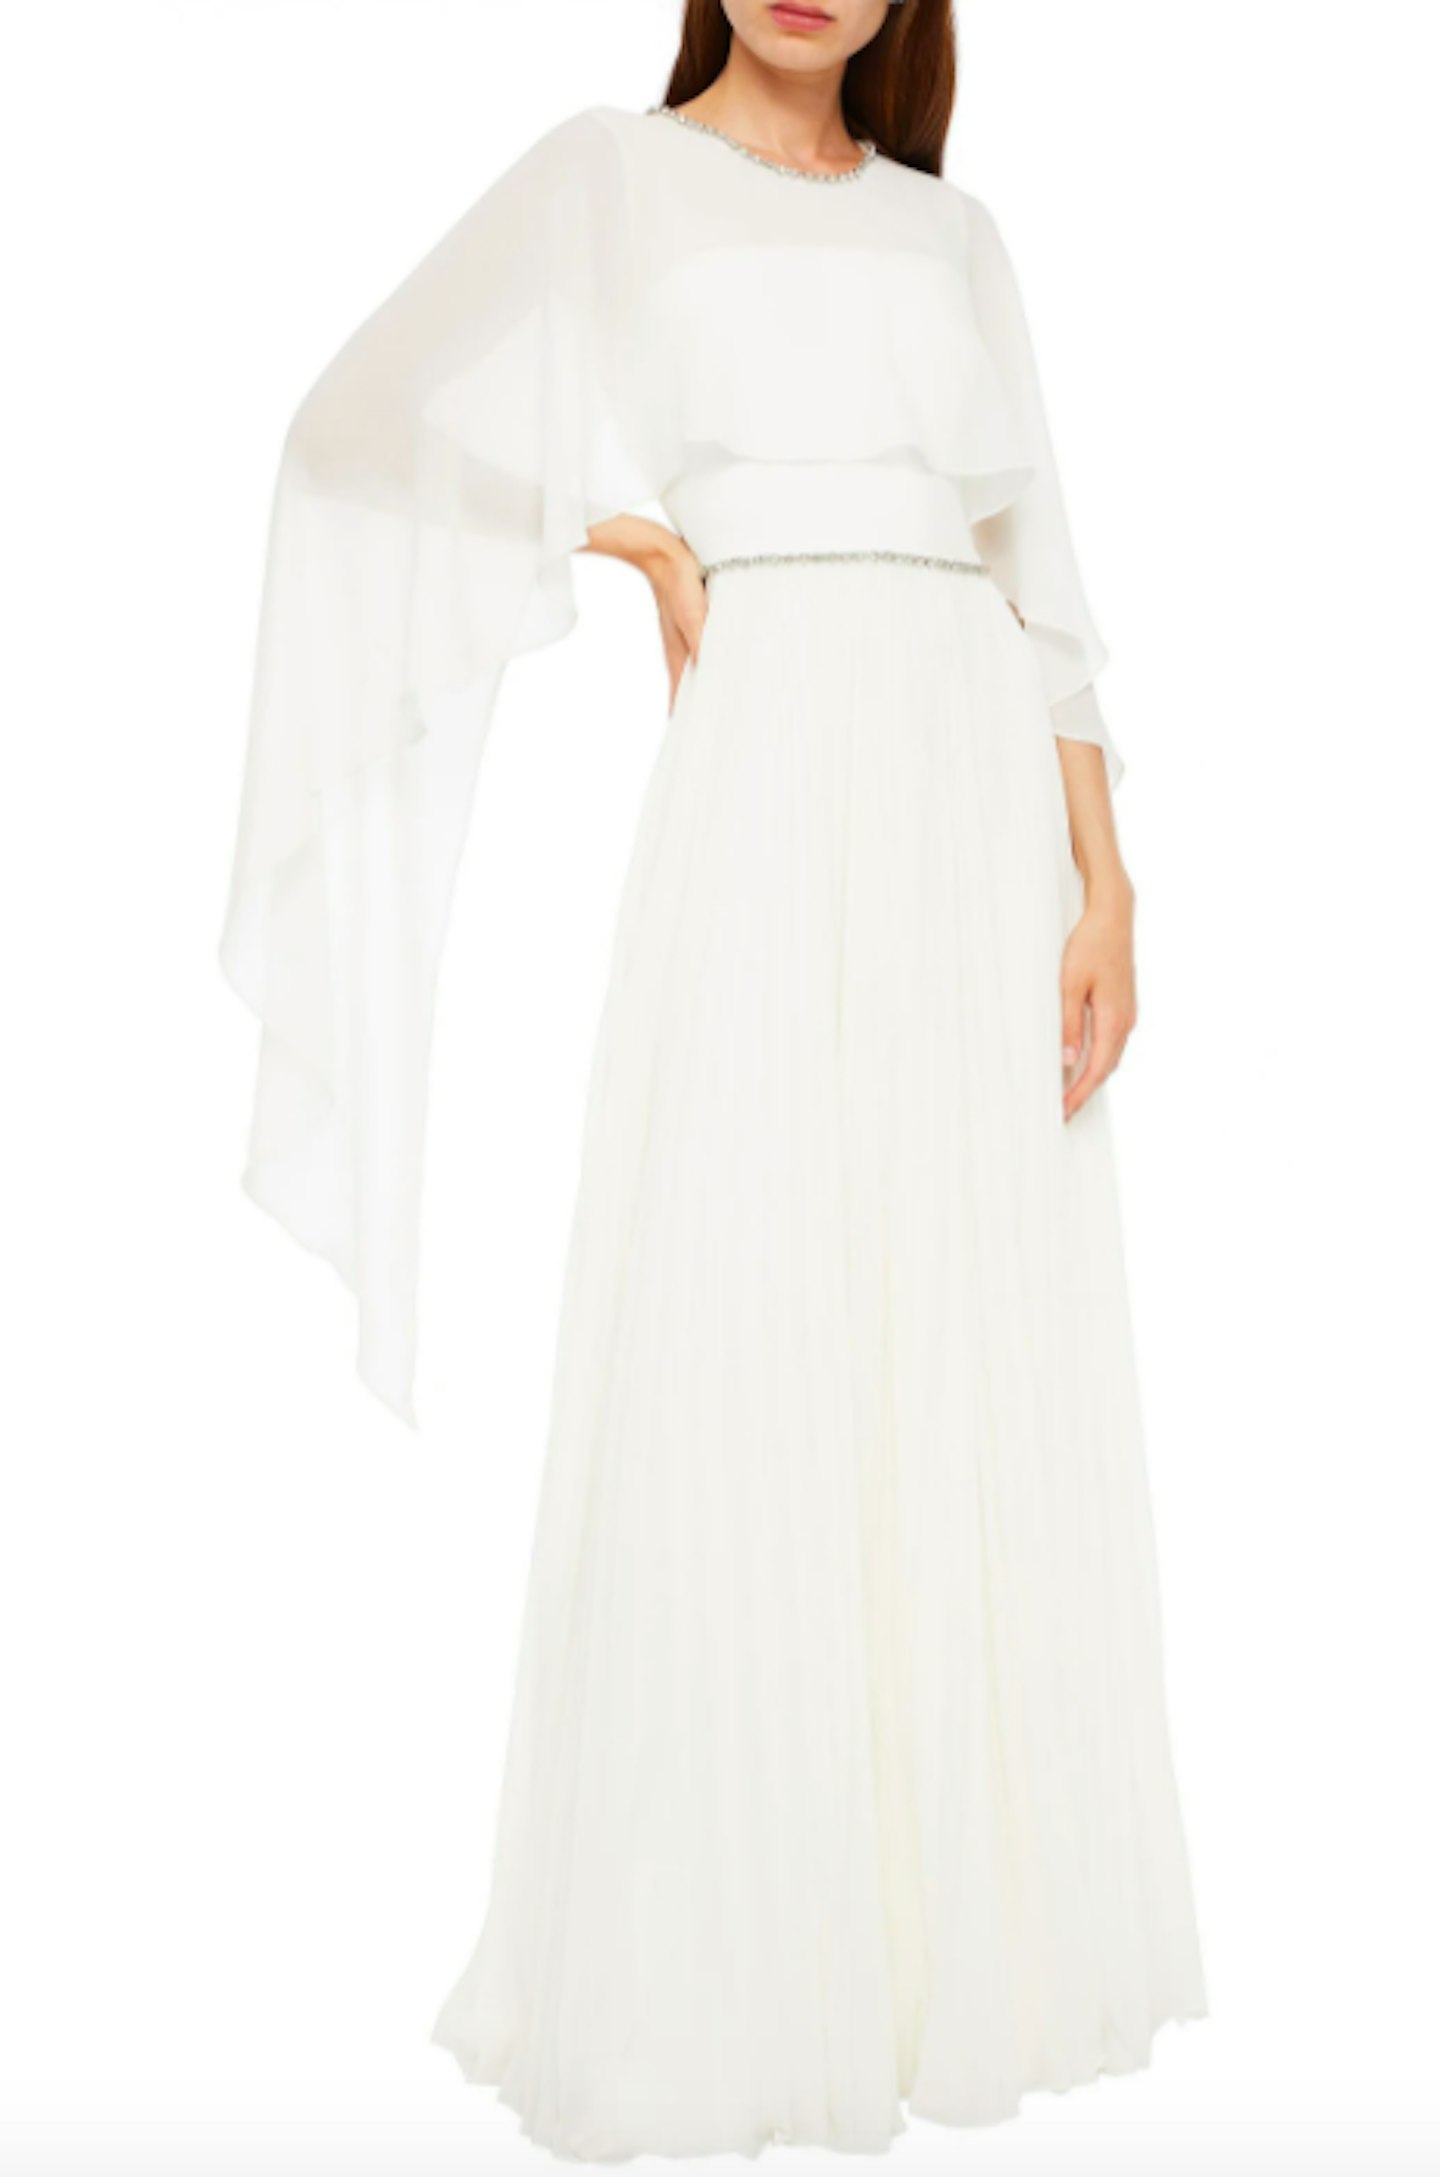 Bloom Cape-Back Embellished Chiffon Bridal Gown, £1,498